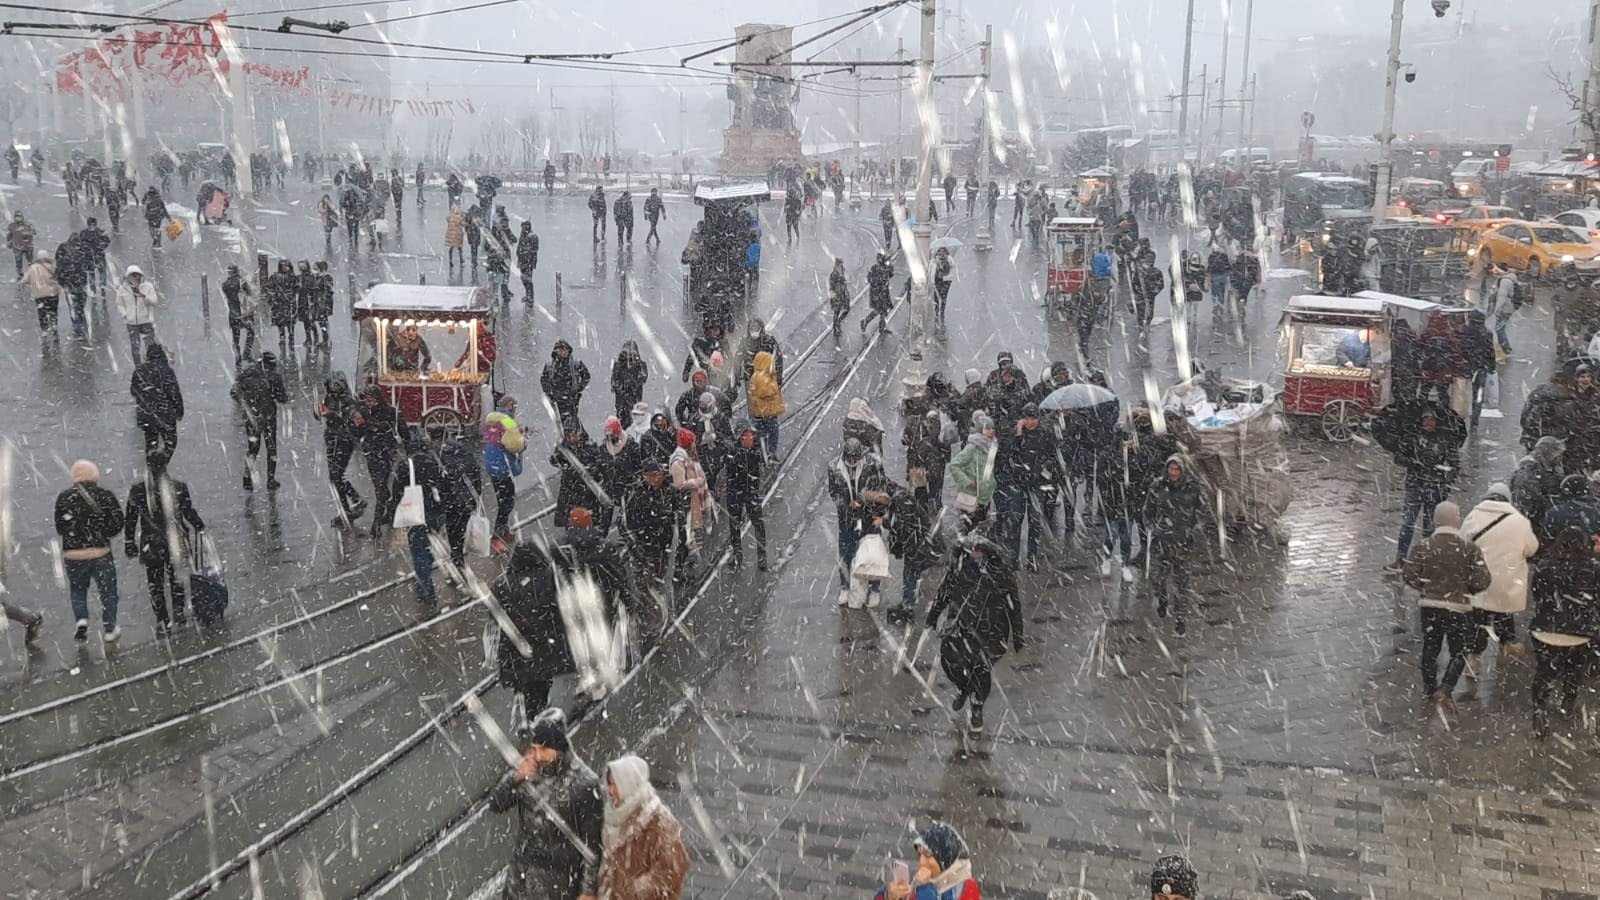 Snowing in Taksim Square, Istanbul, Turkey, March 11, 2022. (IHA Photo)